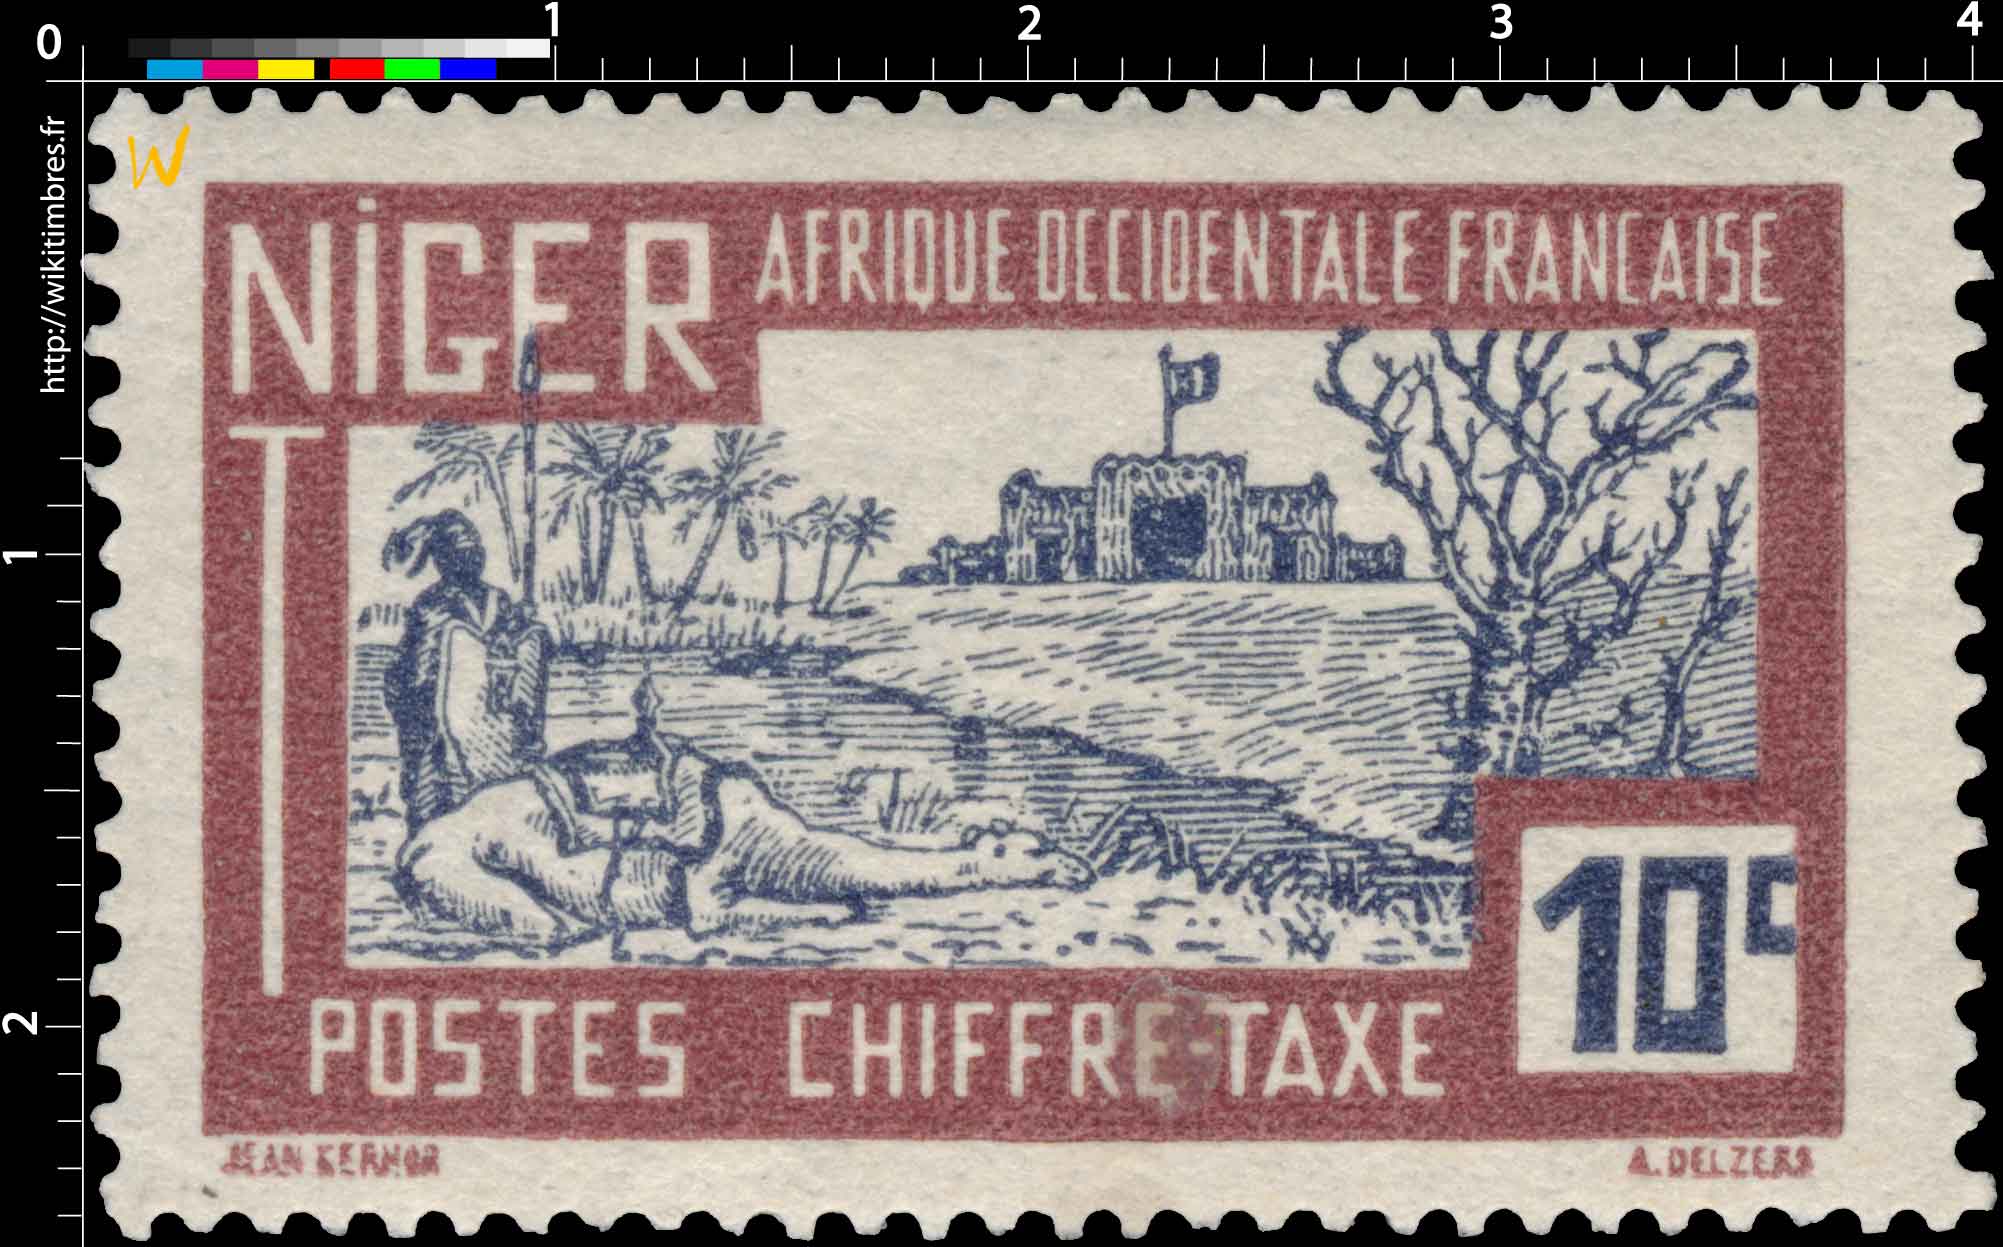 Afrique occidentale française - Niger CHIFFRE TAXE